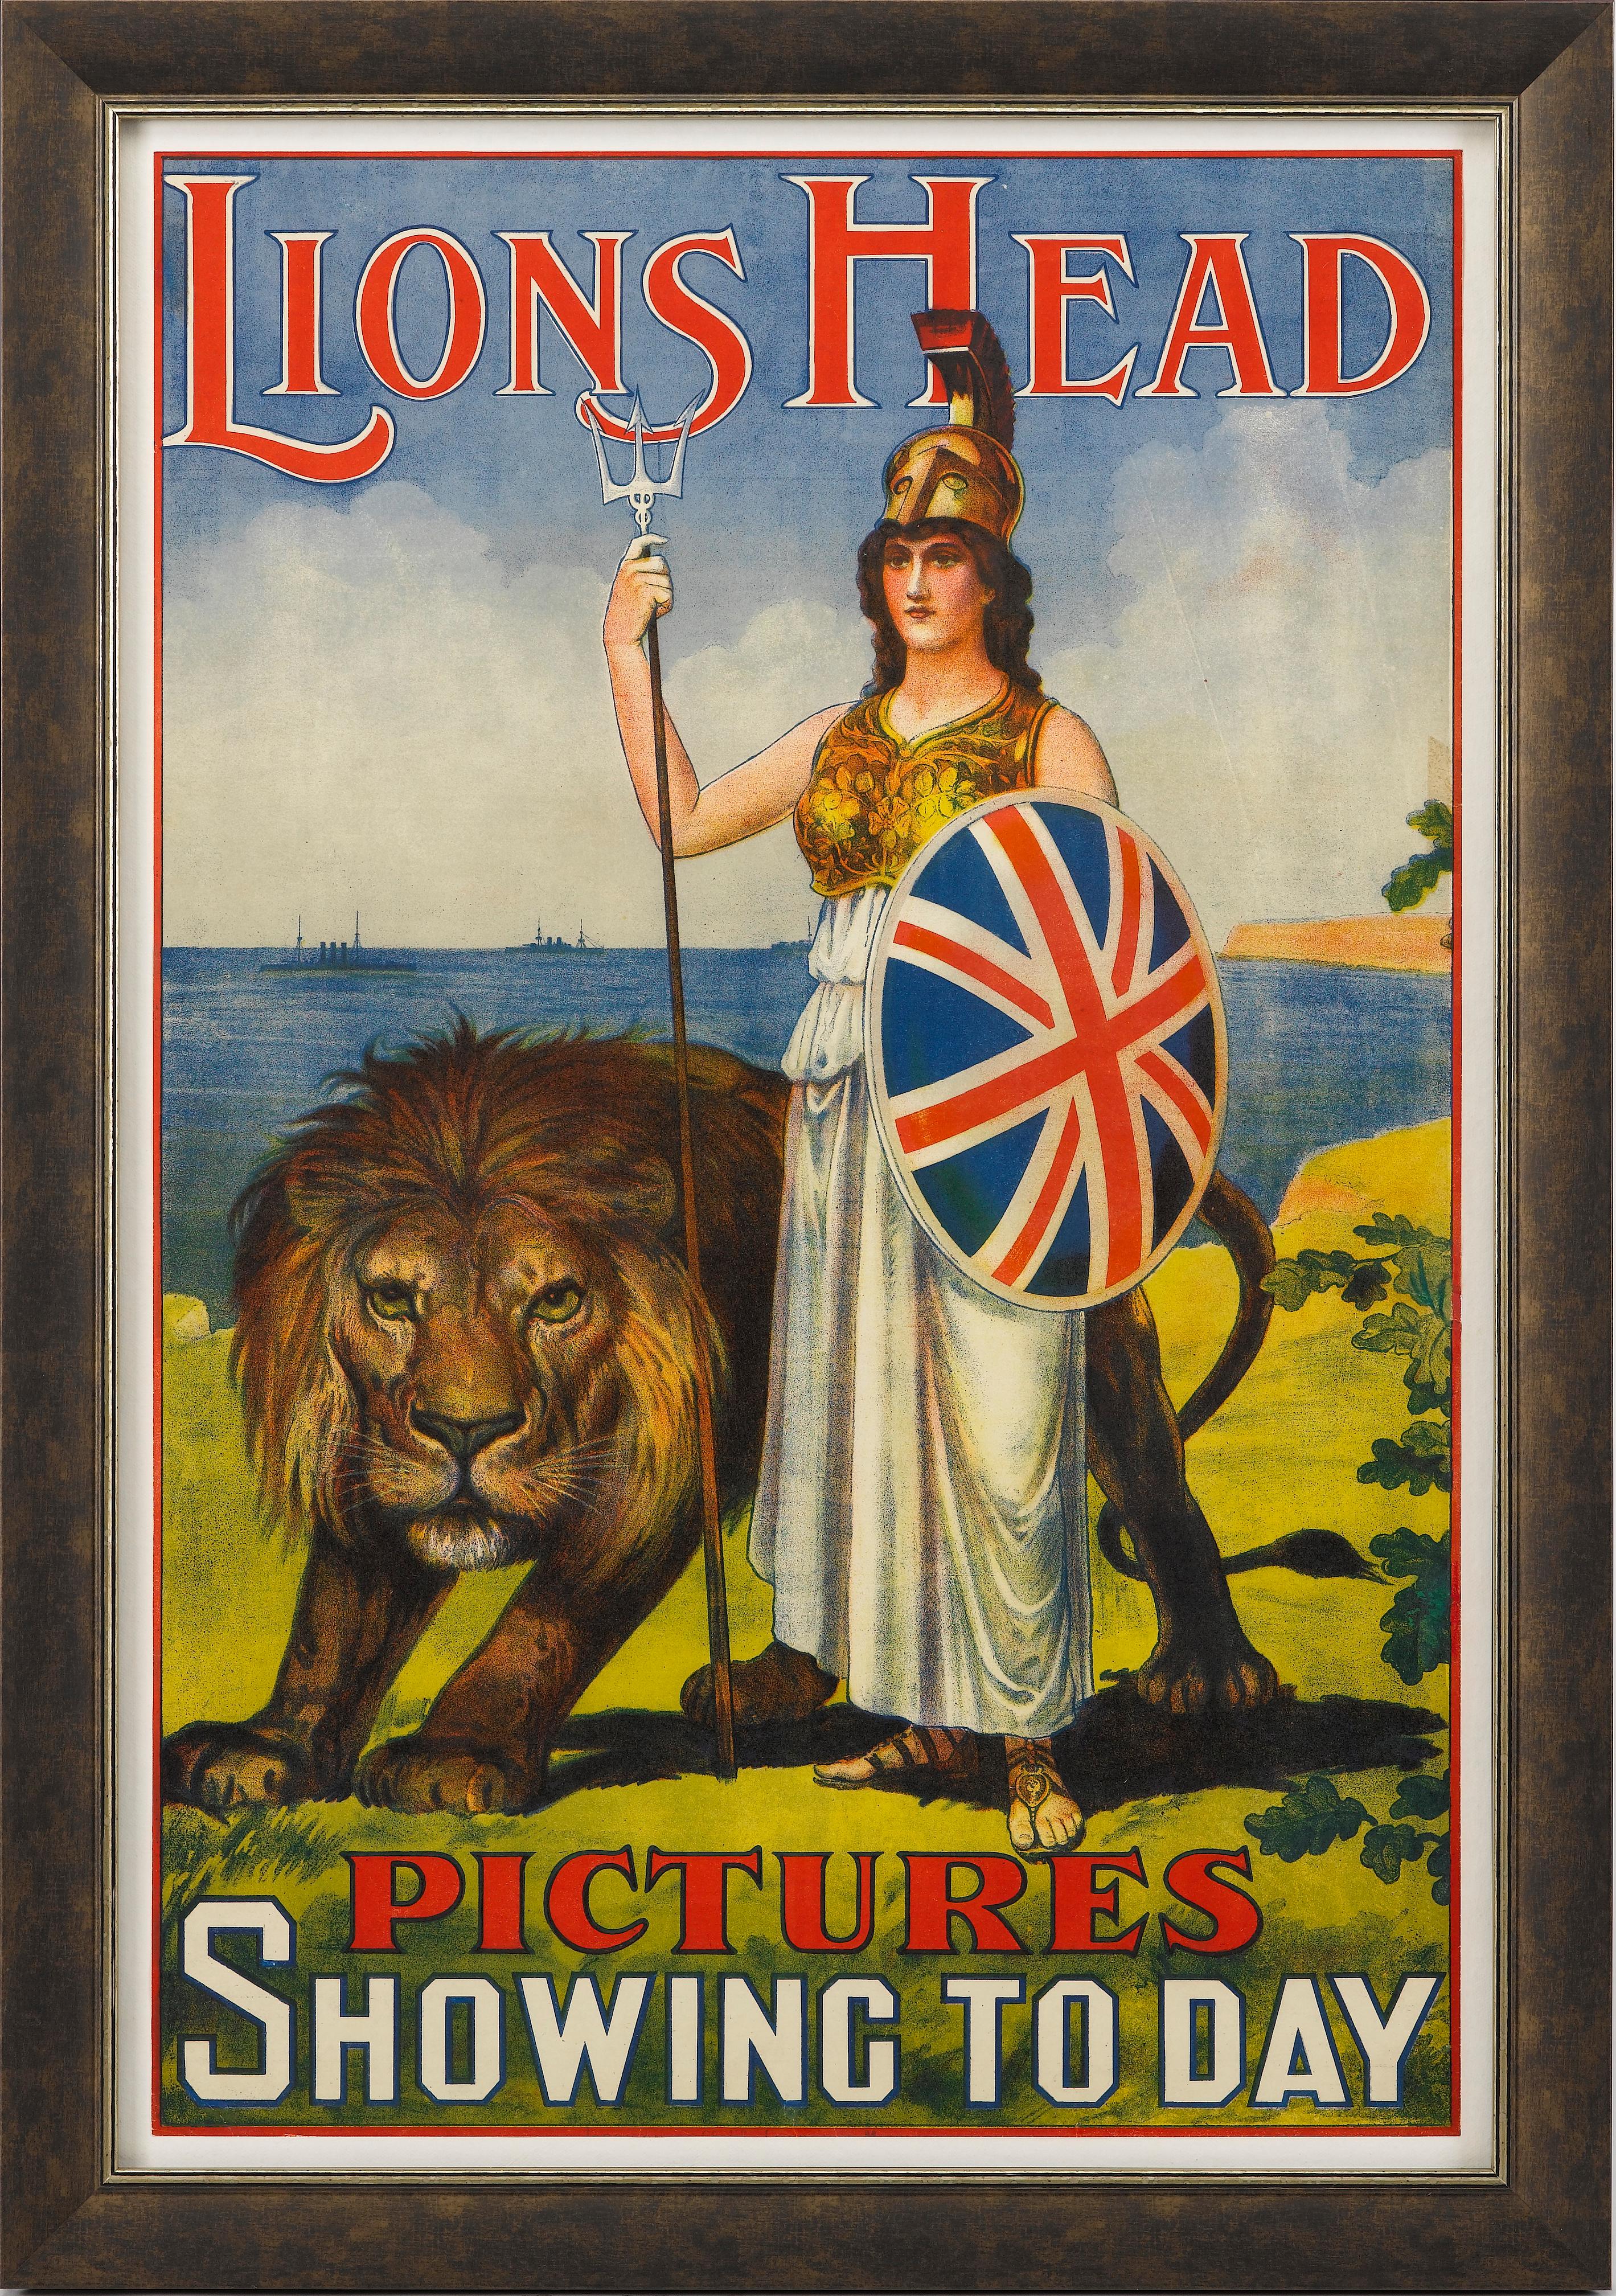 Lions Head Pictures, Vintage-Filmplakat, um 1911 (Frühes 20. Jahrhundert) im Angebot